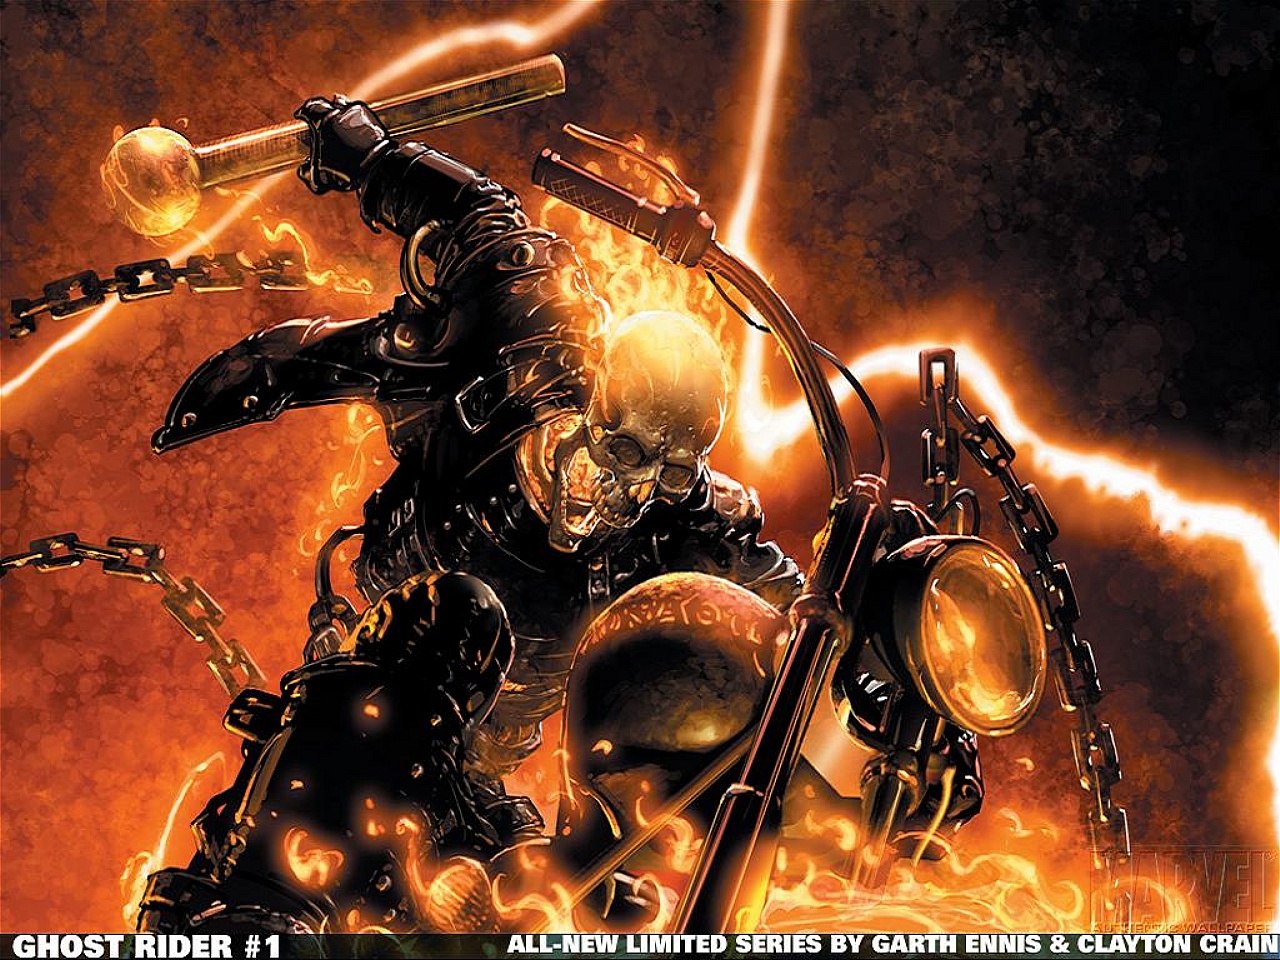 Ghost Rider Wallpaper HD